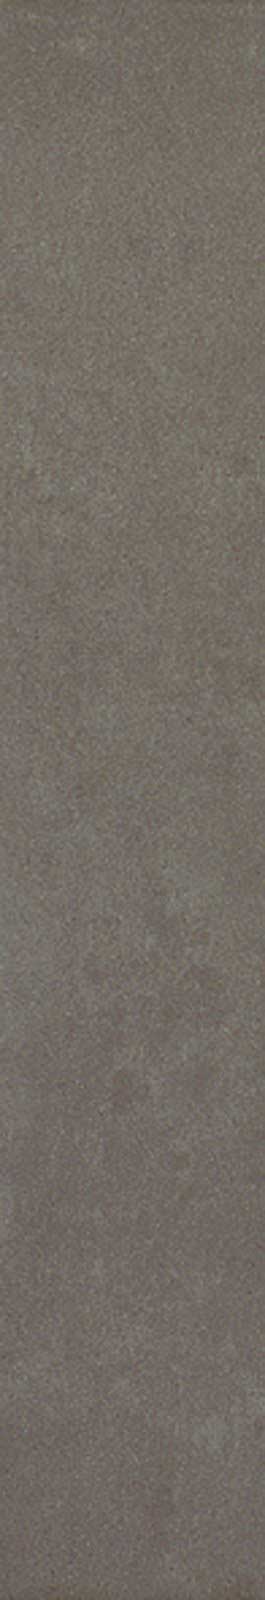 Gresie spatii publice Marazzi Neutro Tortora 10x60 cm Rectificata M9Z1